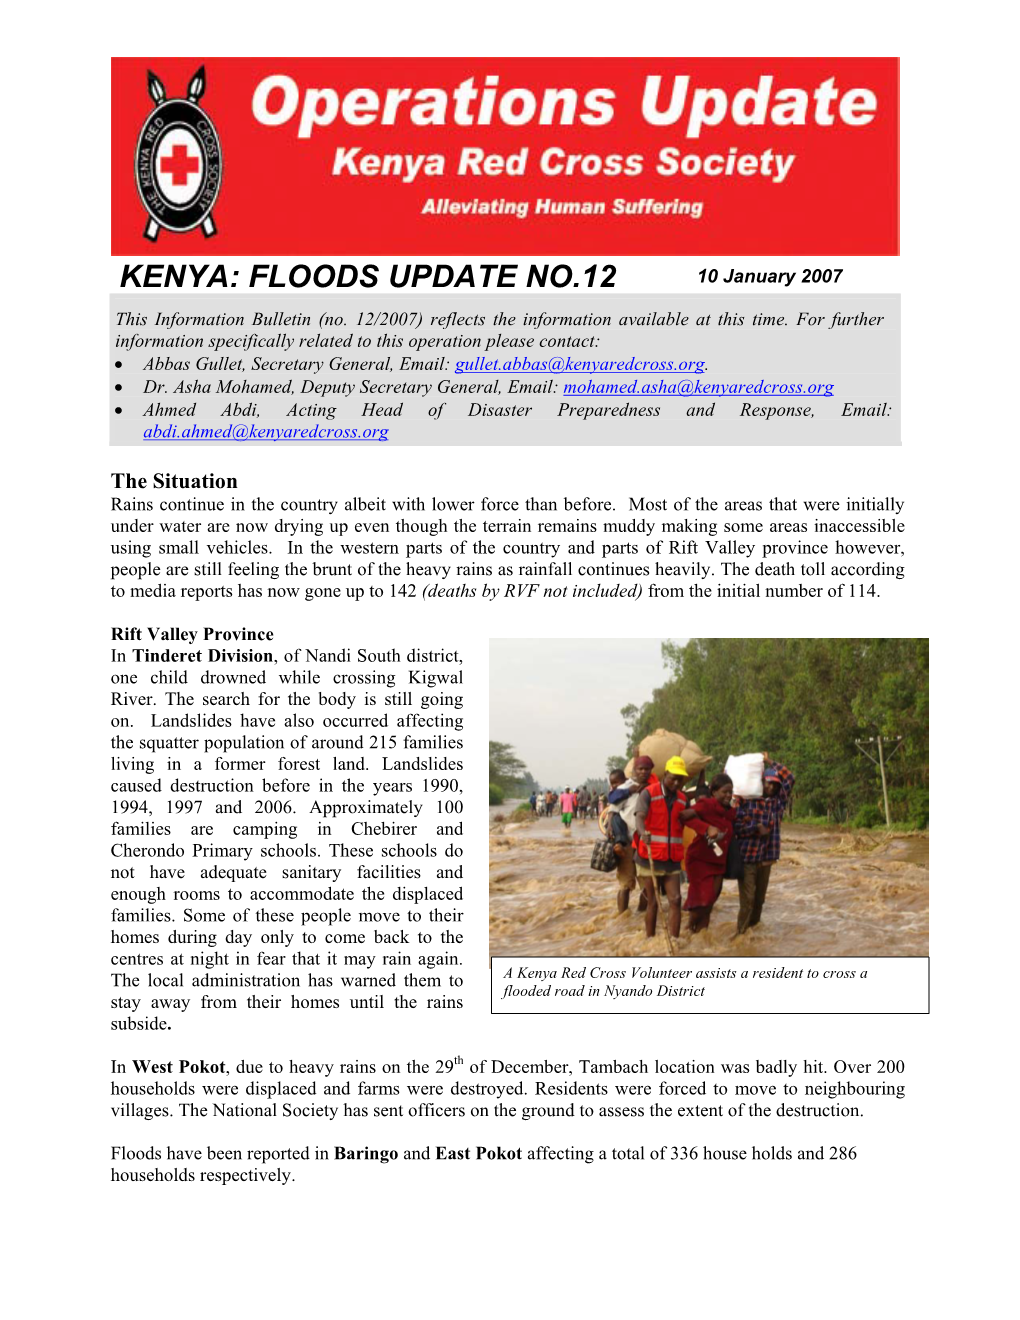 KENYA: FLOODS UPDATE NO.12 10 January 2007 This Information Bulletin (No